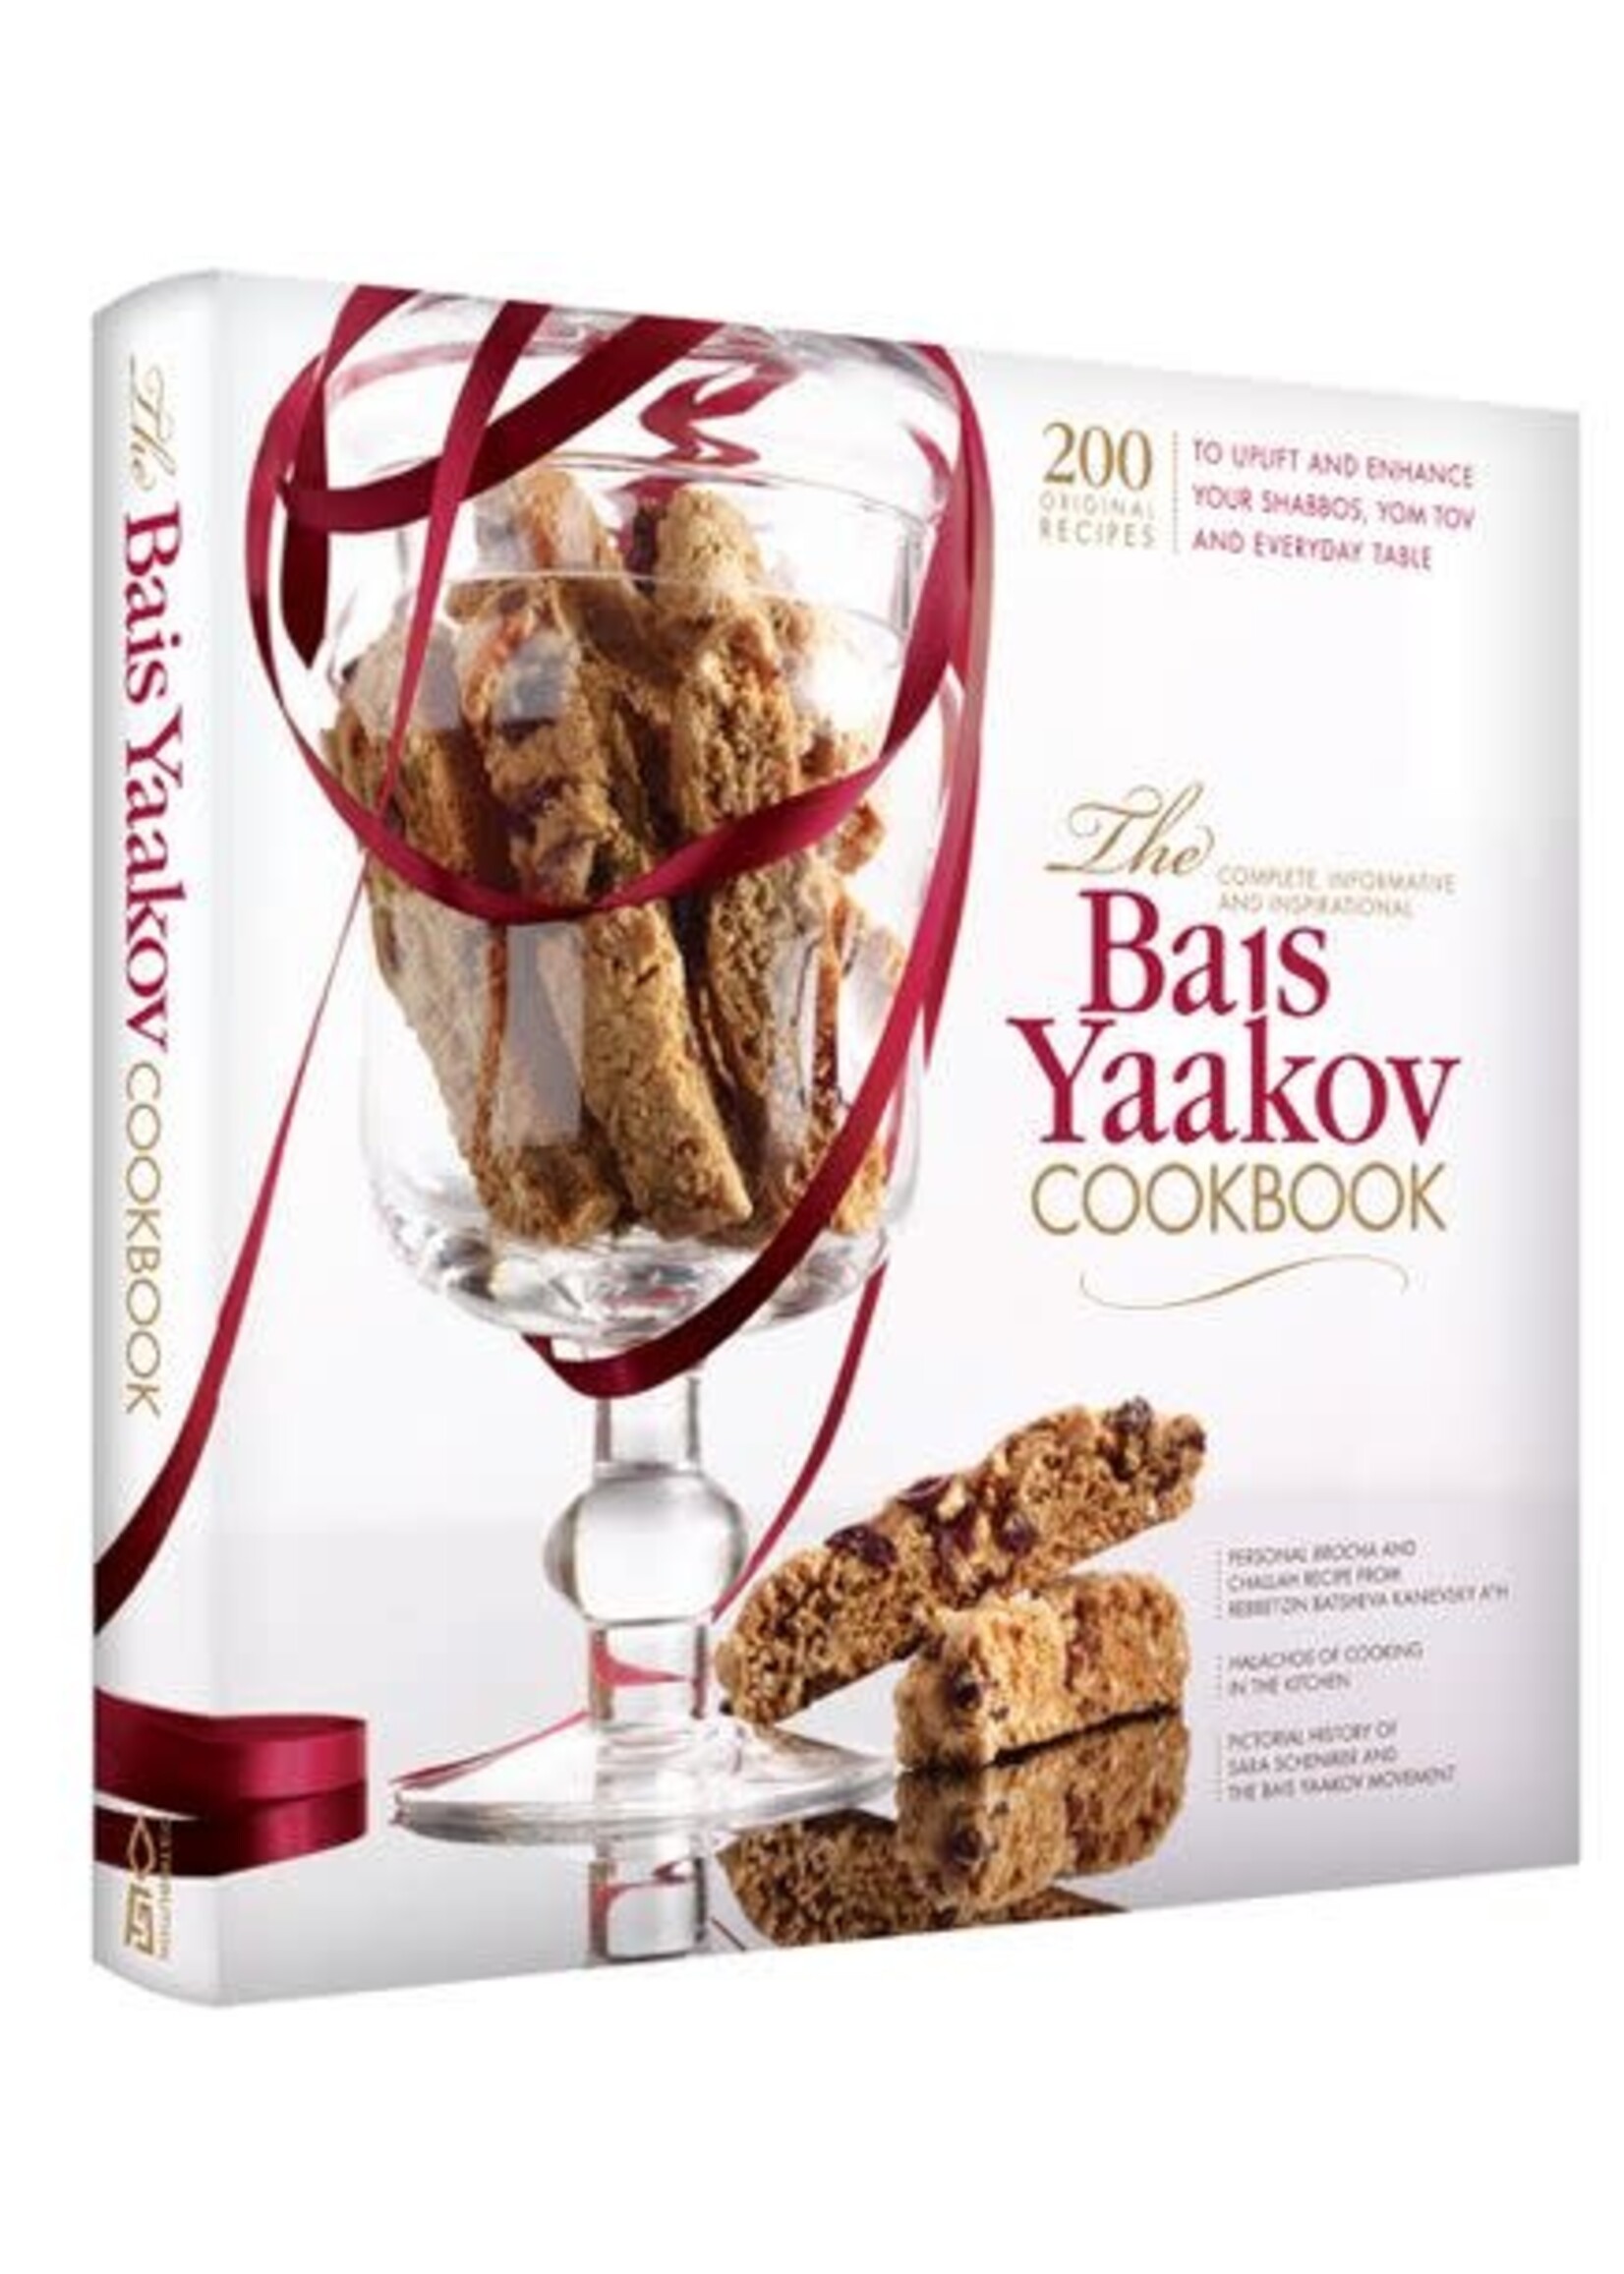 THE BAIS YAAKOV COOKBOOK